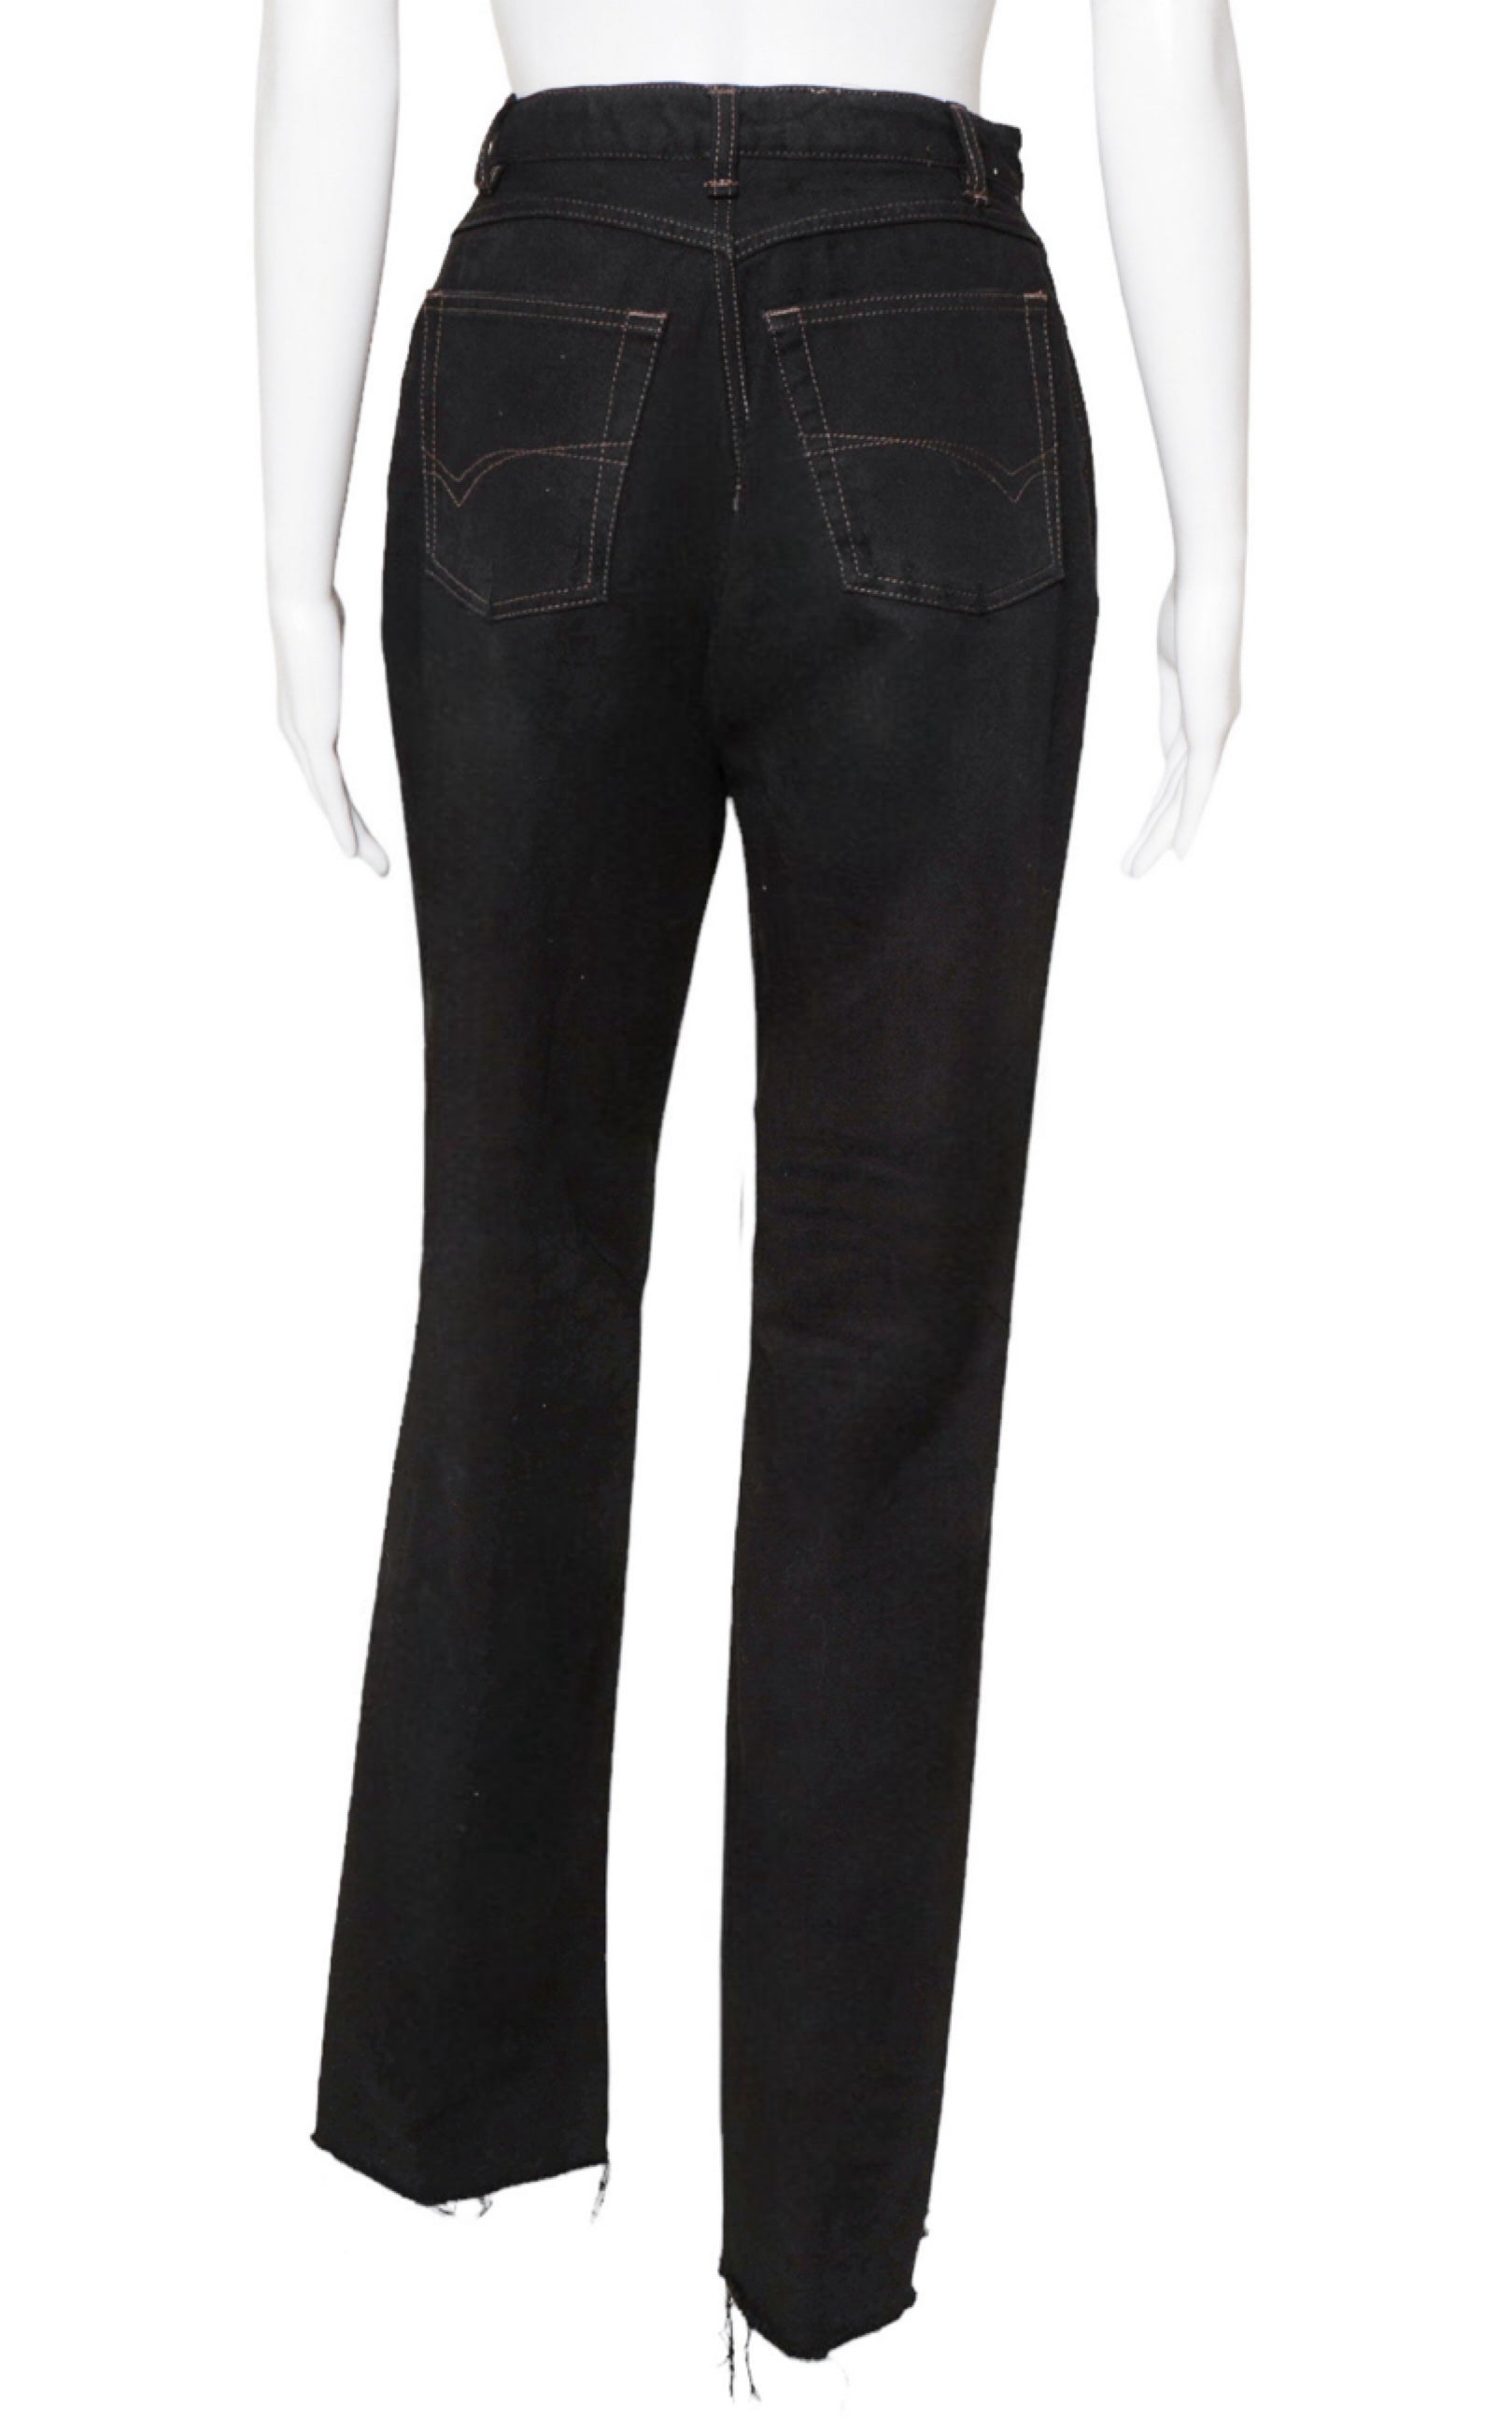 BALENCIAGA Jeans Size: No size tags, fit like US 27/4